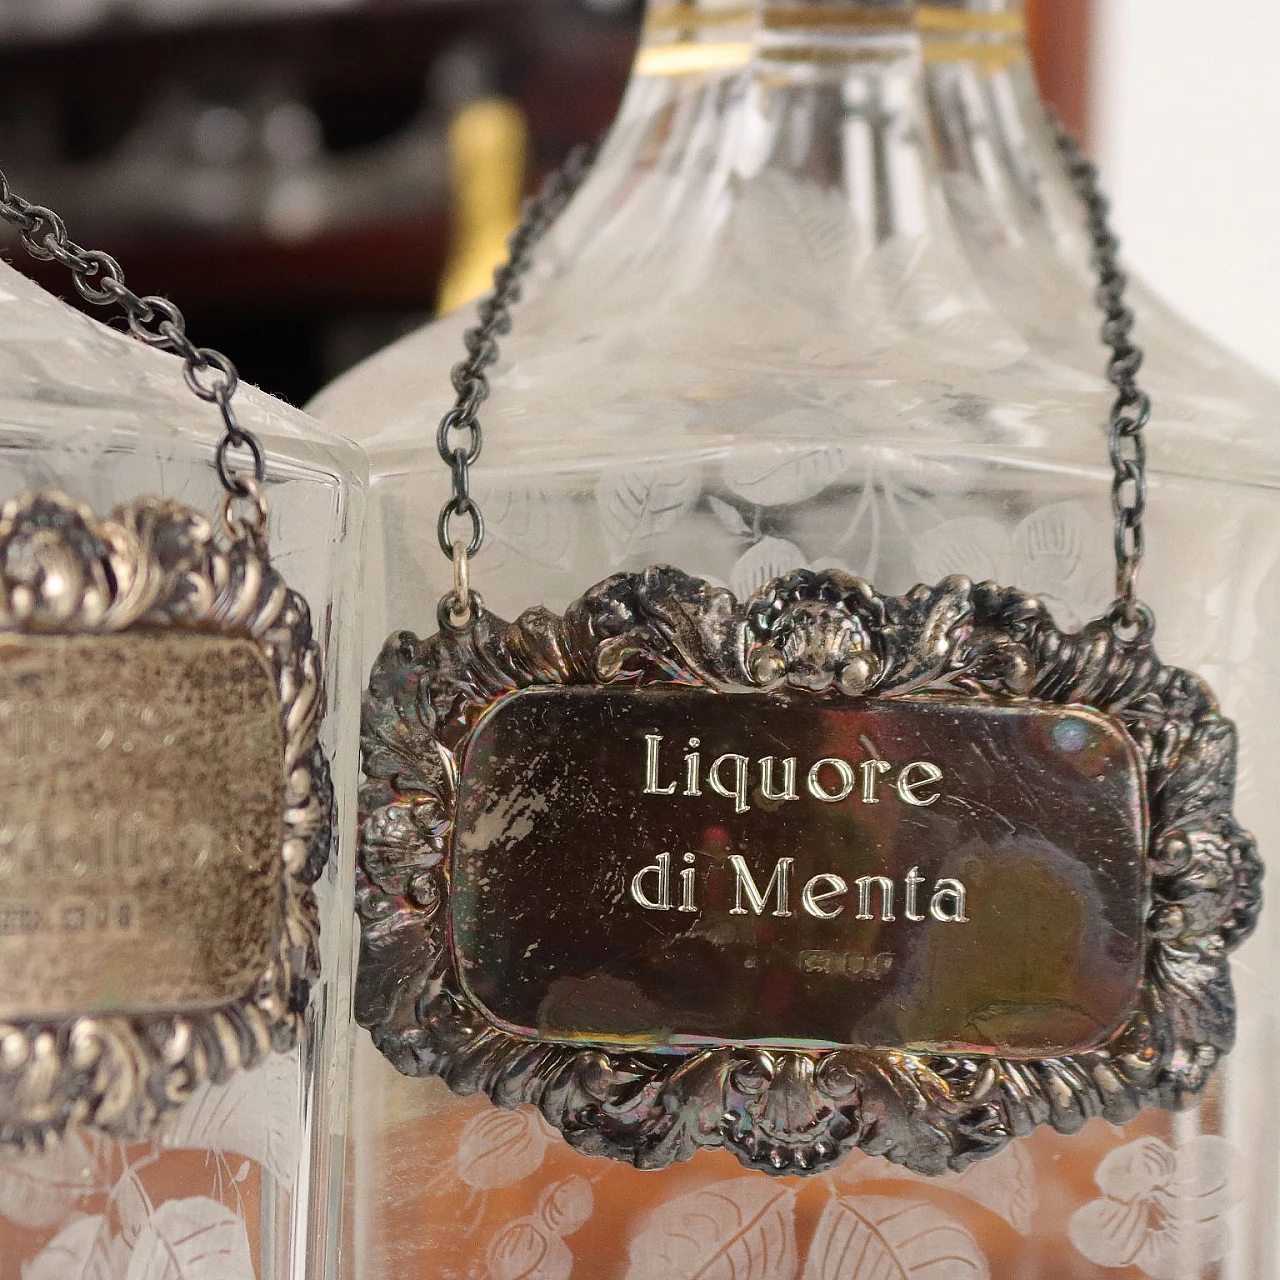 Bois de rose wooden liquor box with glasses & bottles, 19th century 6